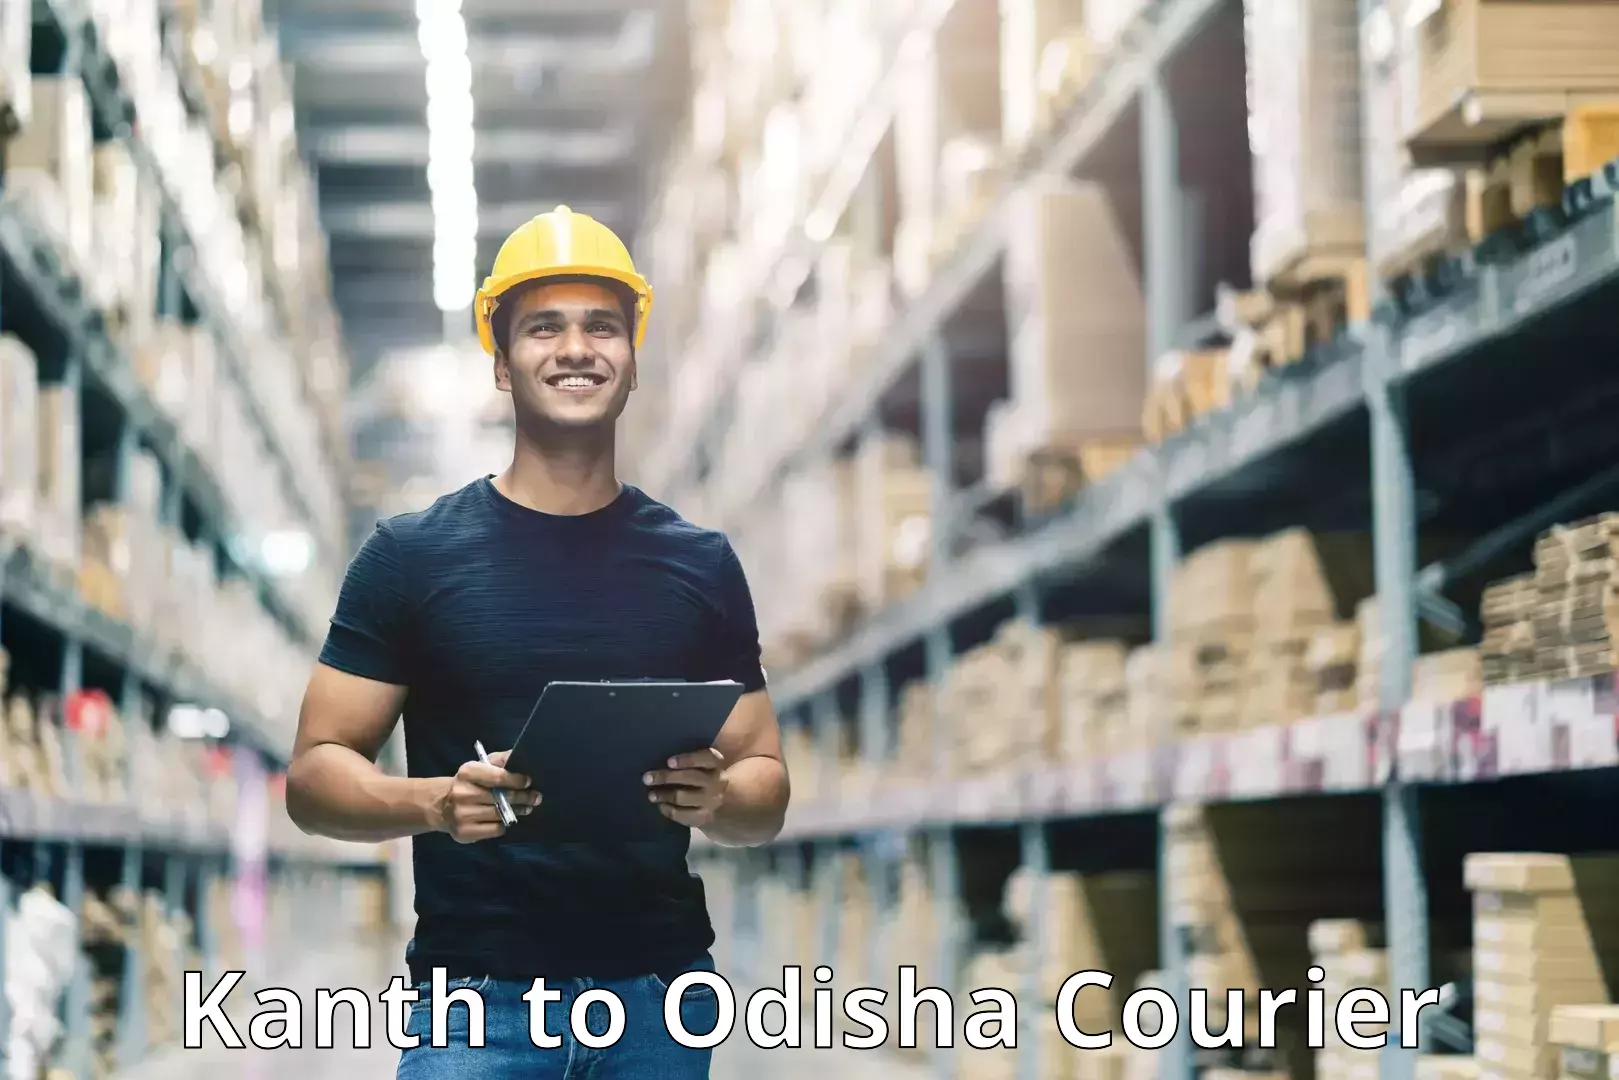 Courier app Kanth to Odisha